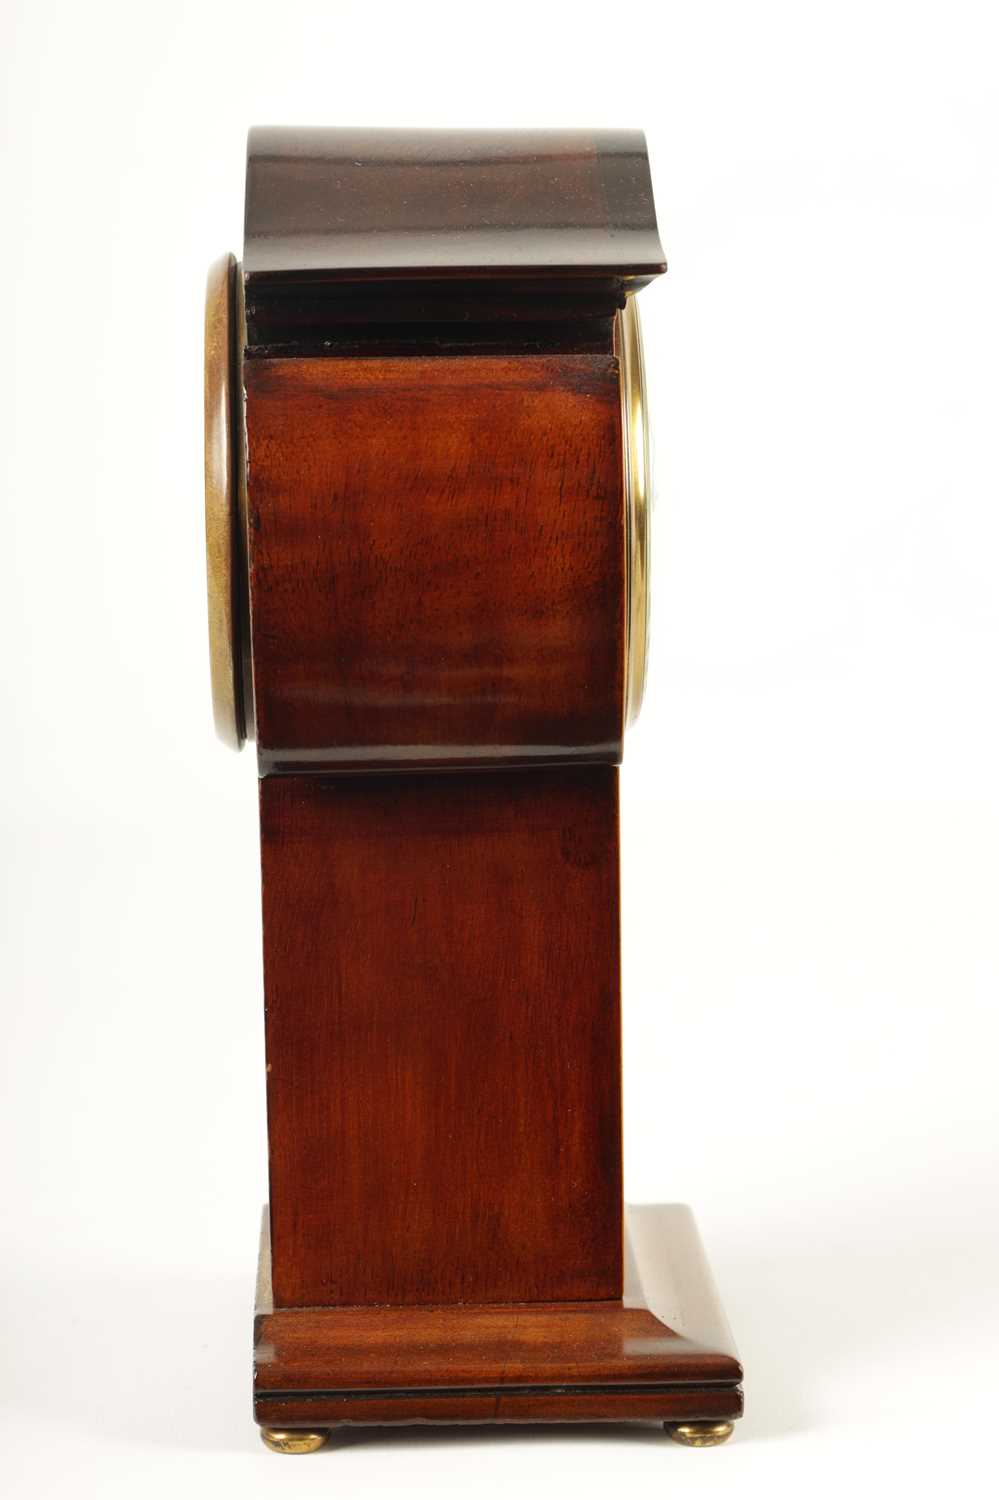 AN EDWARDIAN ART NOUVEAU STYLE BOXWOOD STRUNG AND MAHOGANY INLAID MANTEL CLOCK - Image 7 of 9